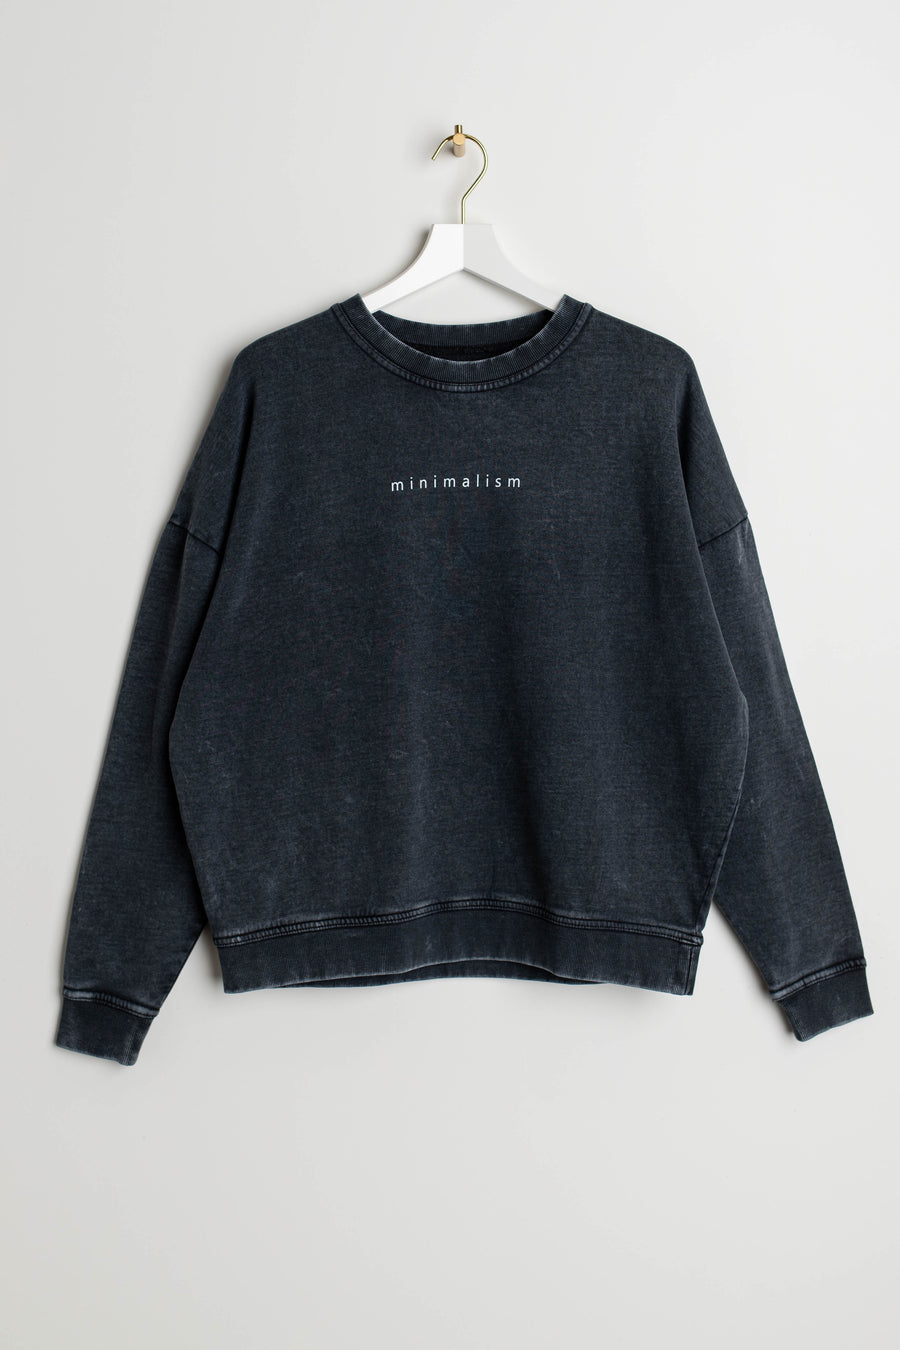 jackieandkate Sweatshirt minimalism grau